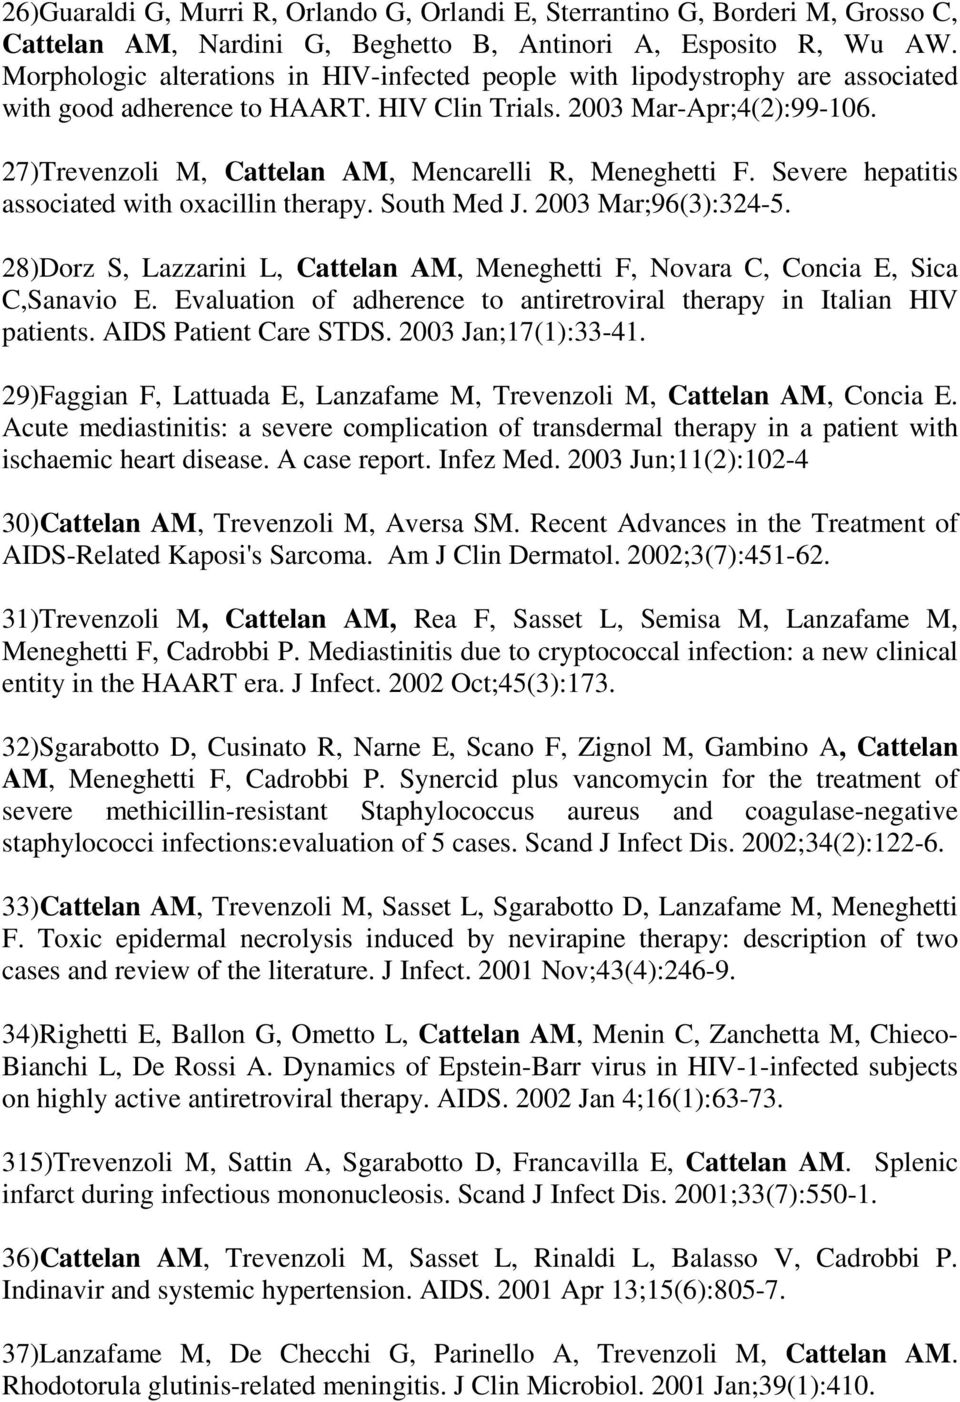 27)Trevenzoli M, Cattelan AM, Mencarelli R, Meneghetti F. Severe hepatitis associated with oxacillin therapy. South Med J. 2003 Mar;96(3):324-5.